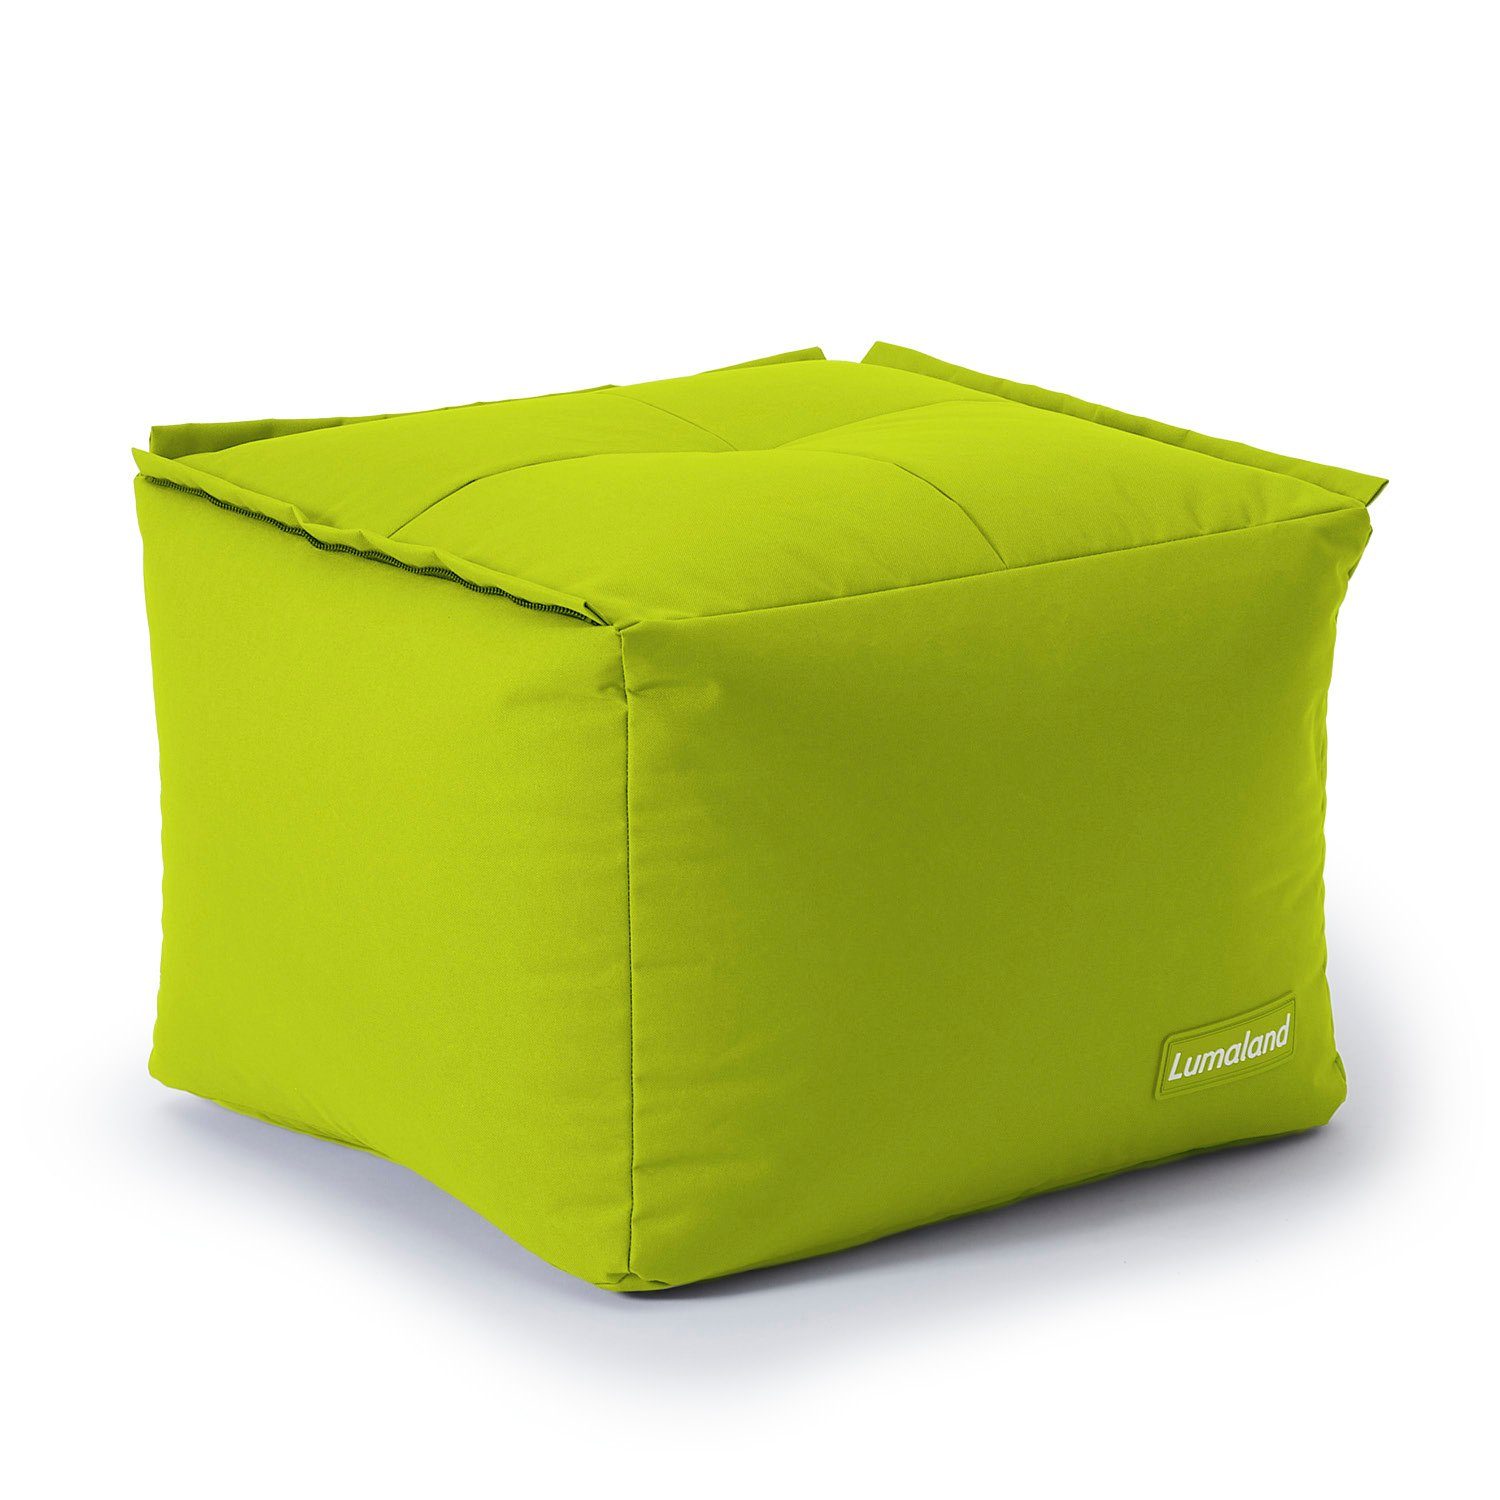 Lumaland Loungeset In- & outdoor Sofa individuell kombinierbar mit dem Modularen System, Sessel wasserfest abnehmbarer Bezug erweiterbar waschbar apfelgrün